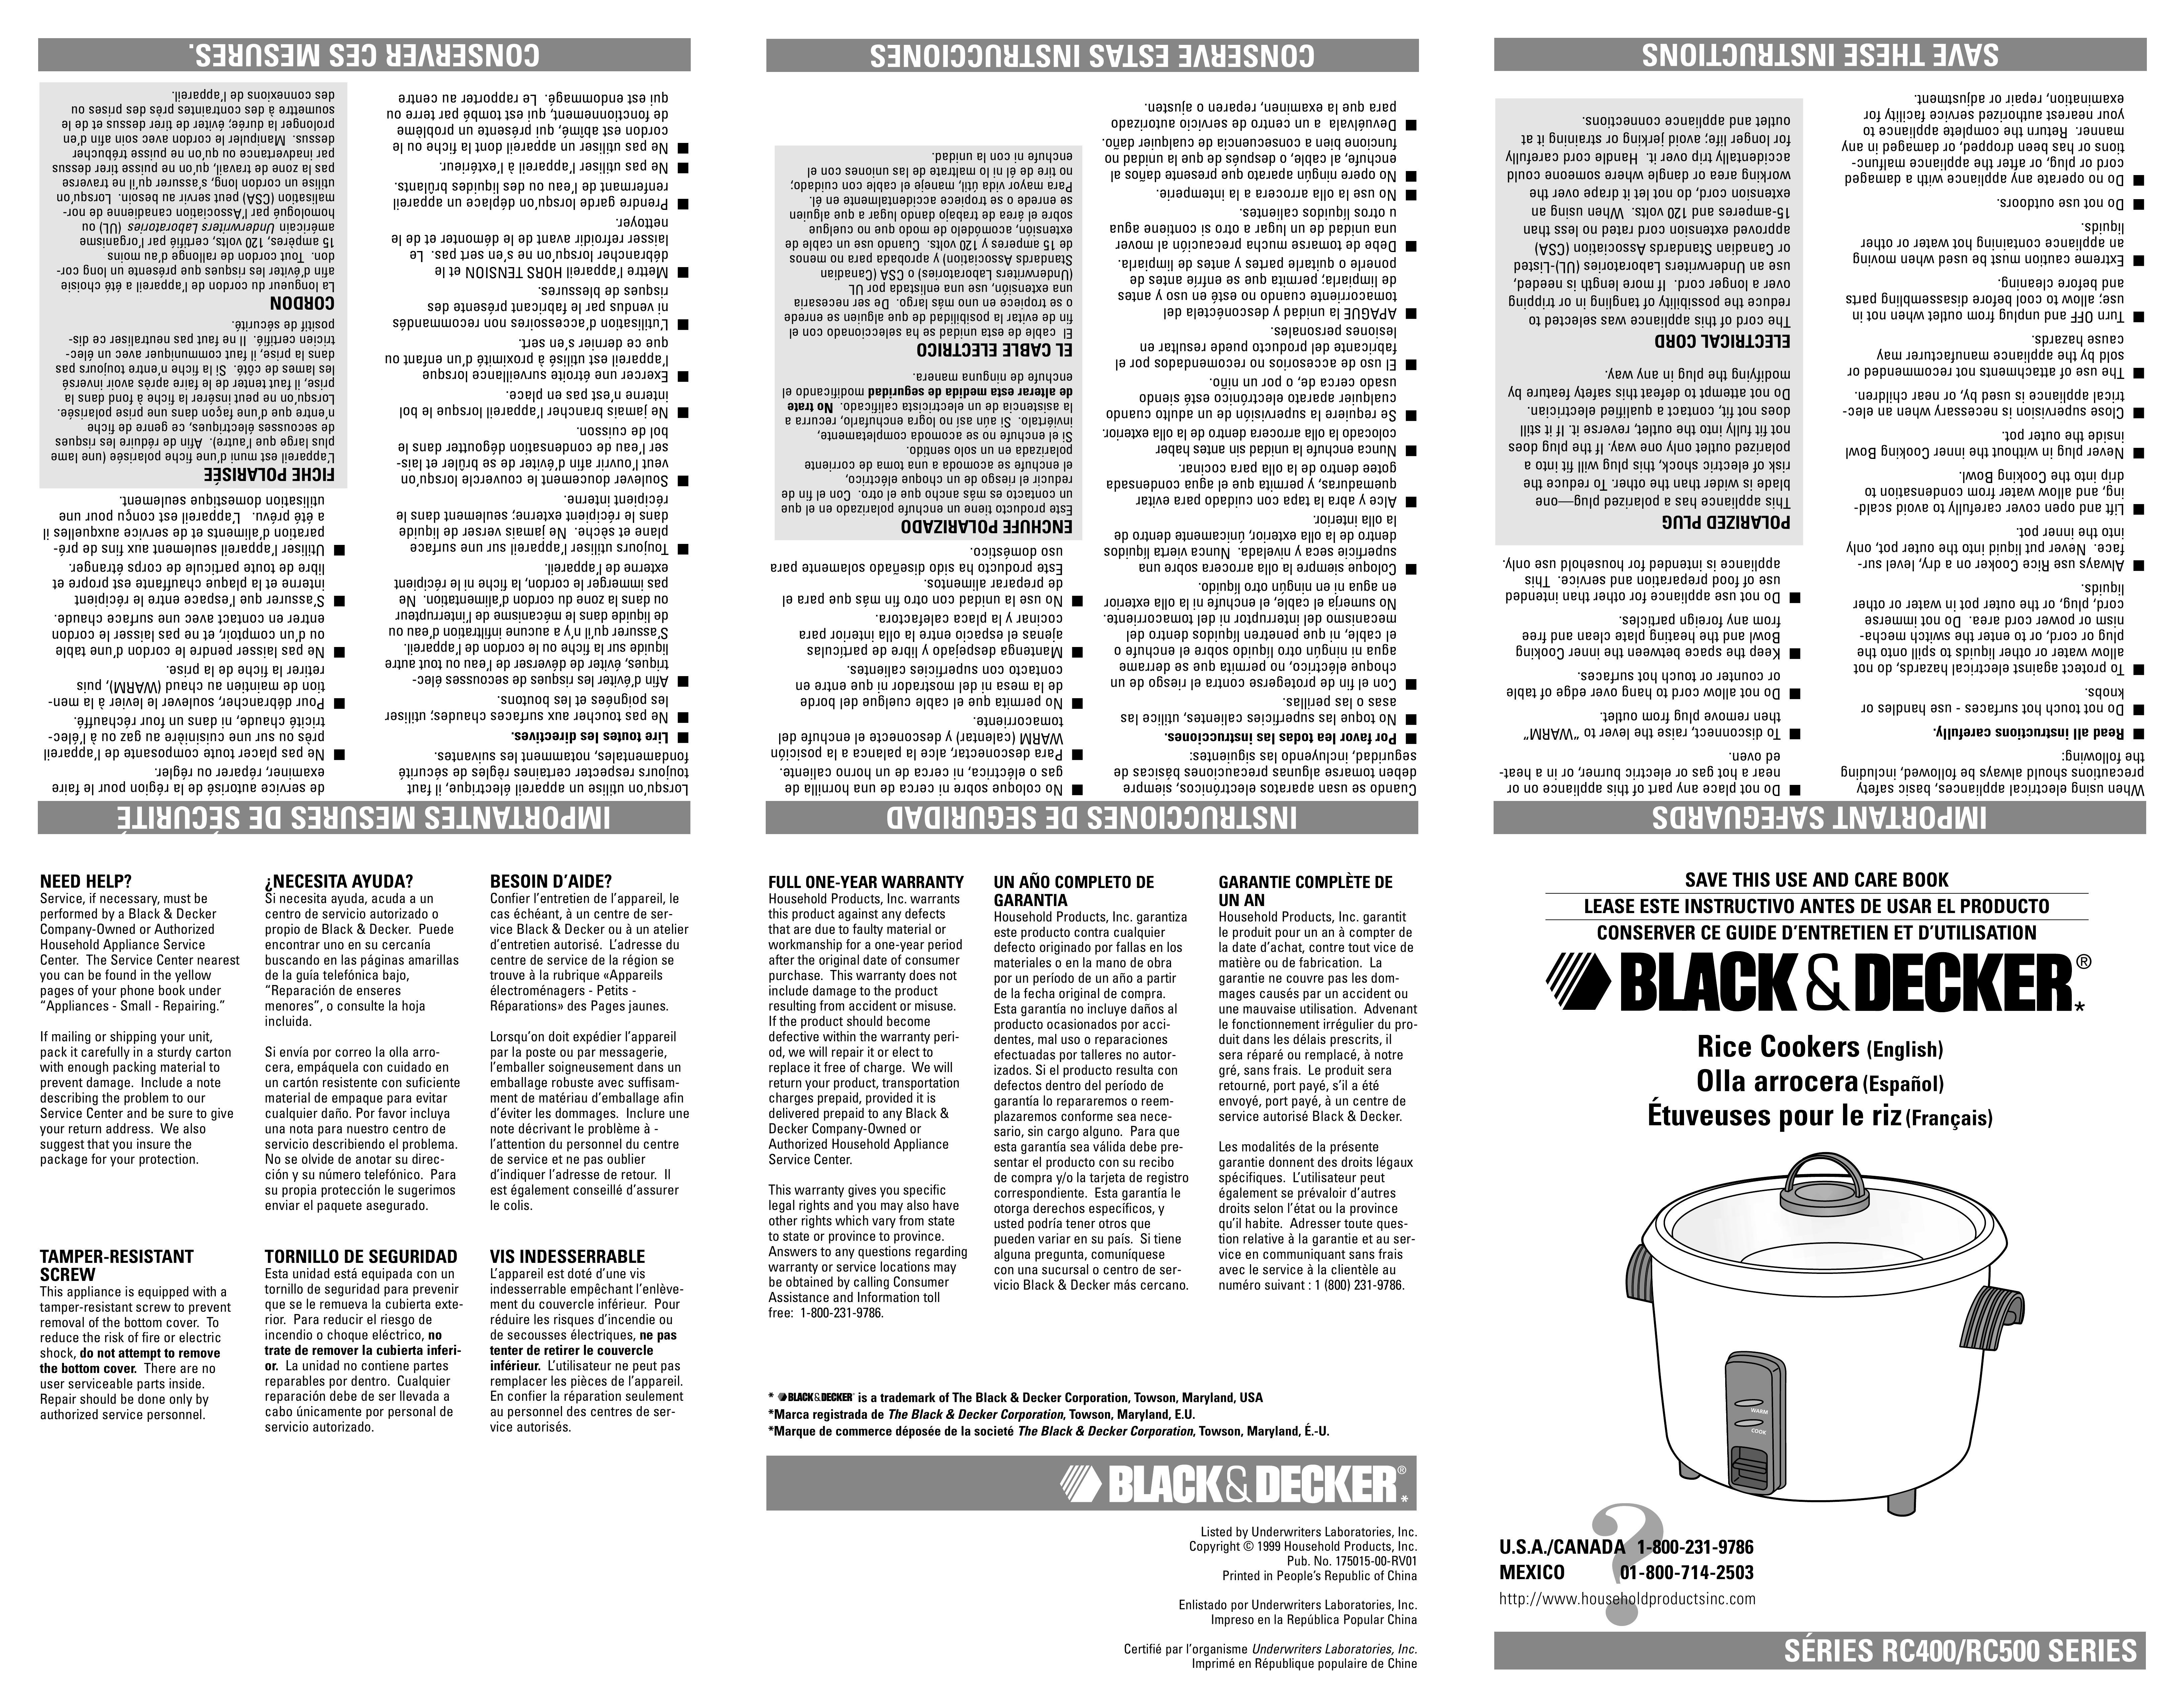 Black & Decker RC400/RC500 Rice Cooker User Manual